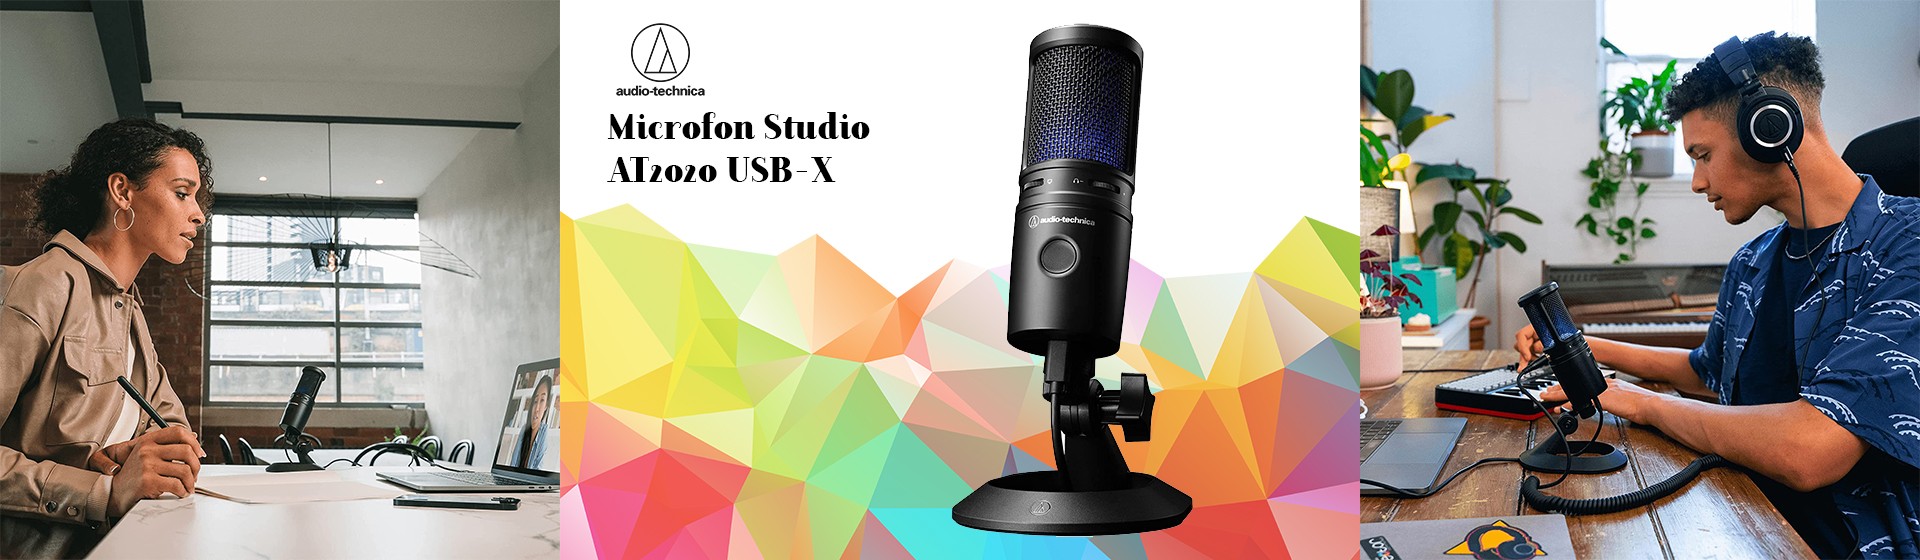 Microfon Studio Audio Technica AT2020 USB-X